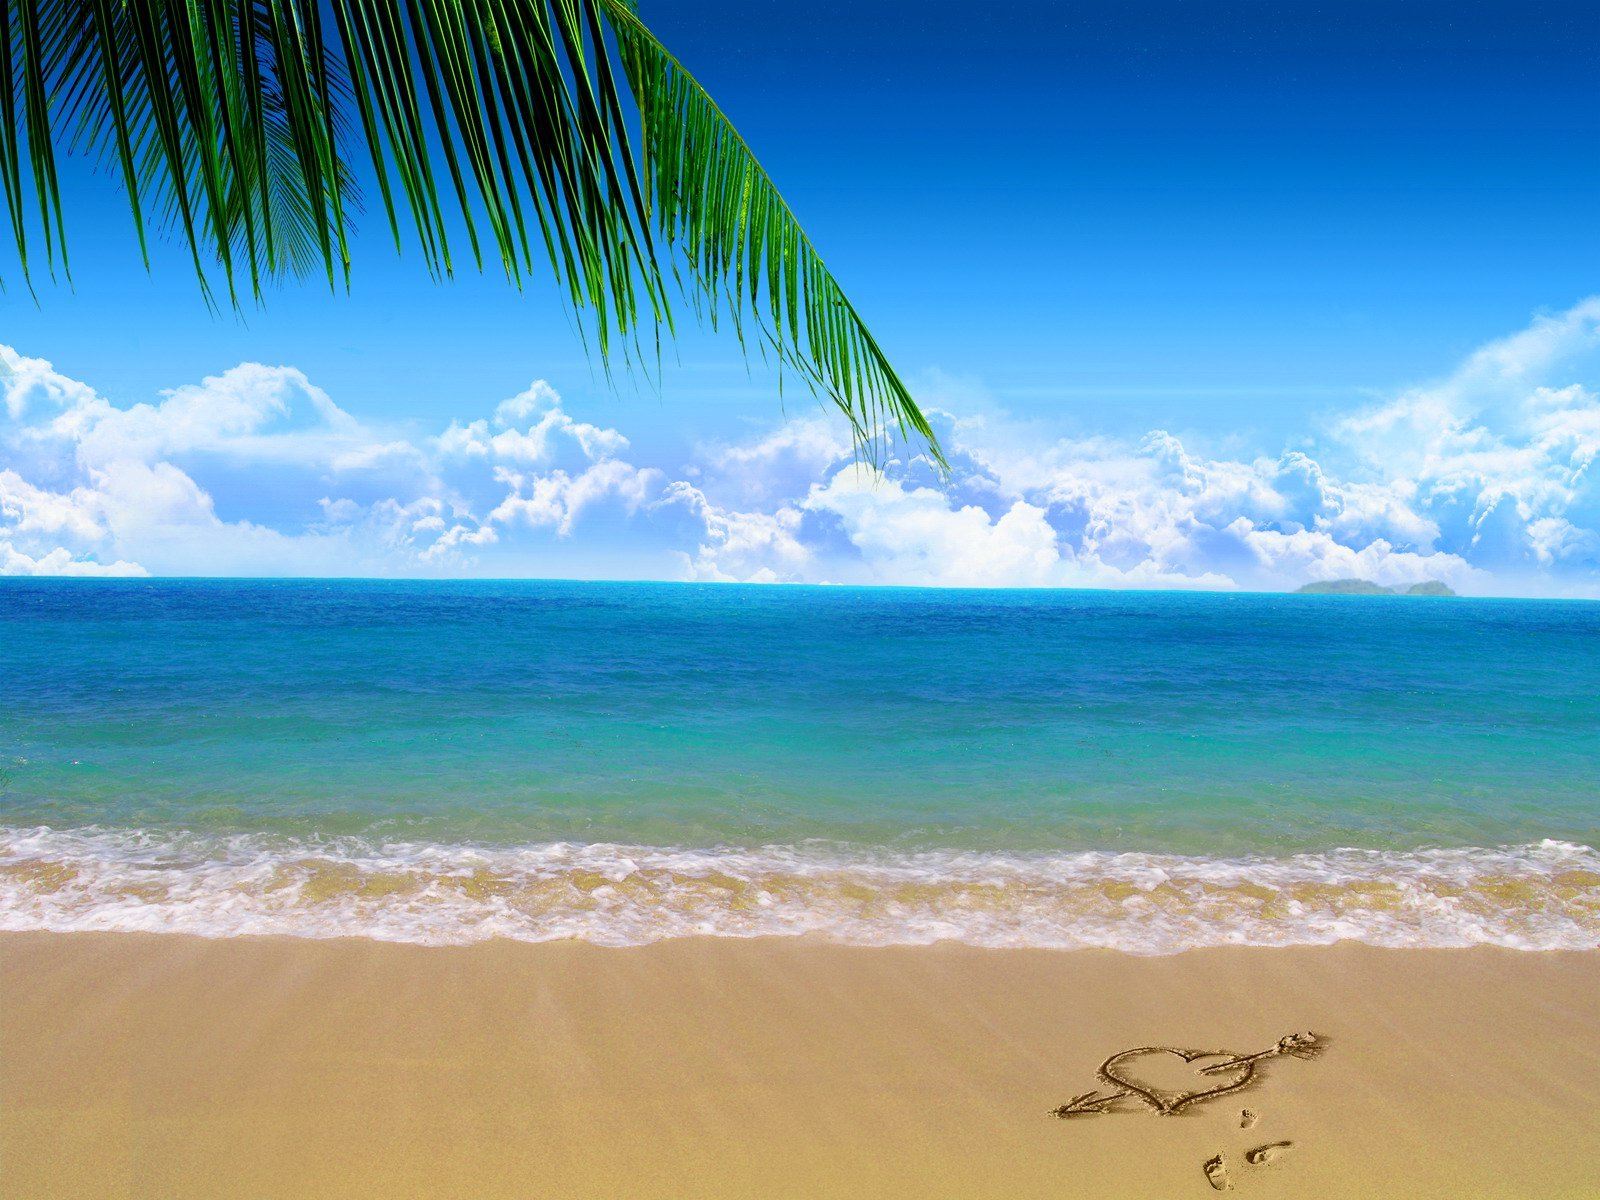 Beach free desktop wallpaper 0011   Free desktop wallpaper downloads